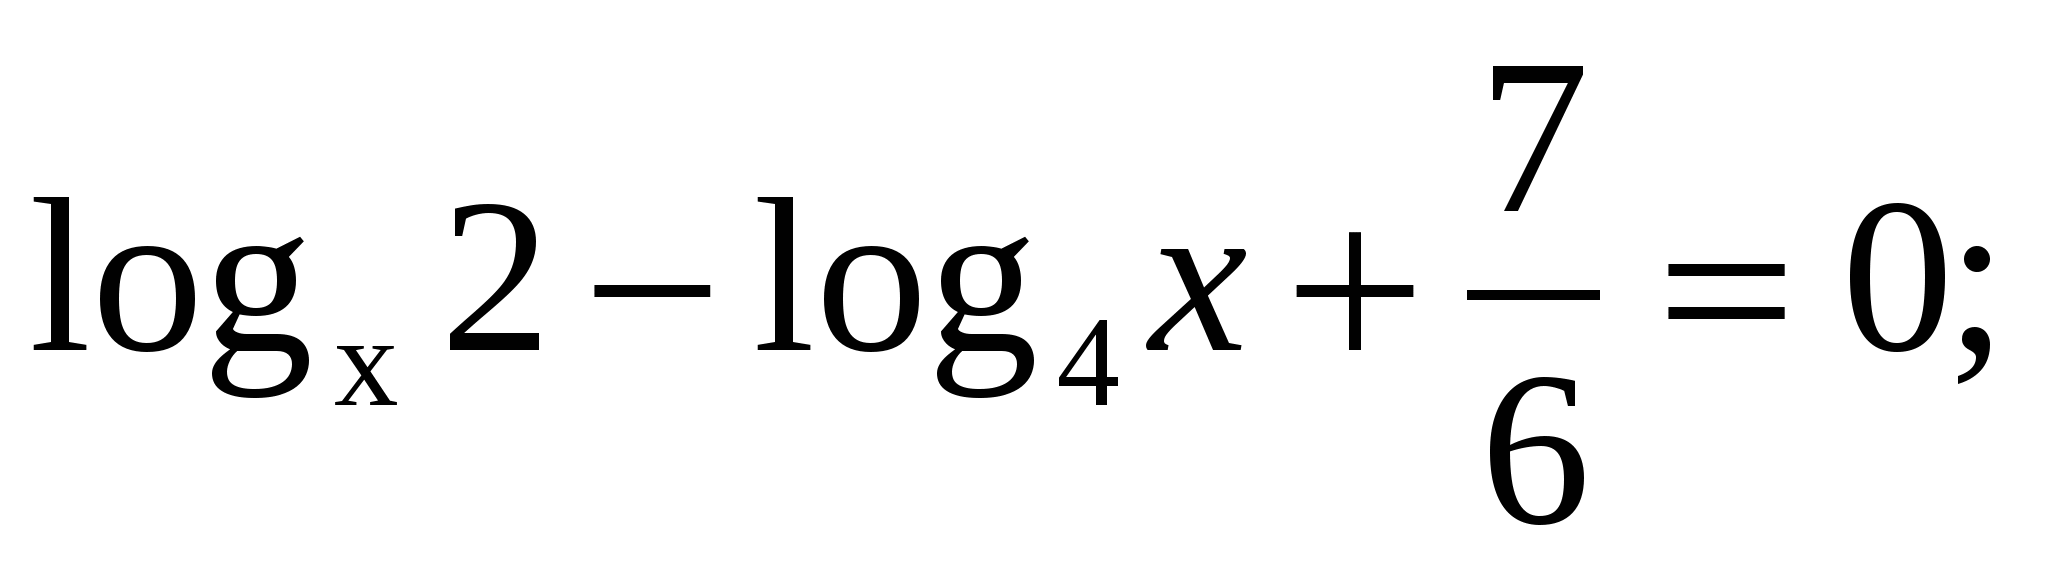 Урок на тему: Логарифмы